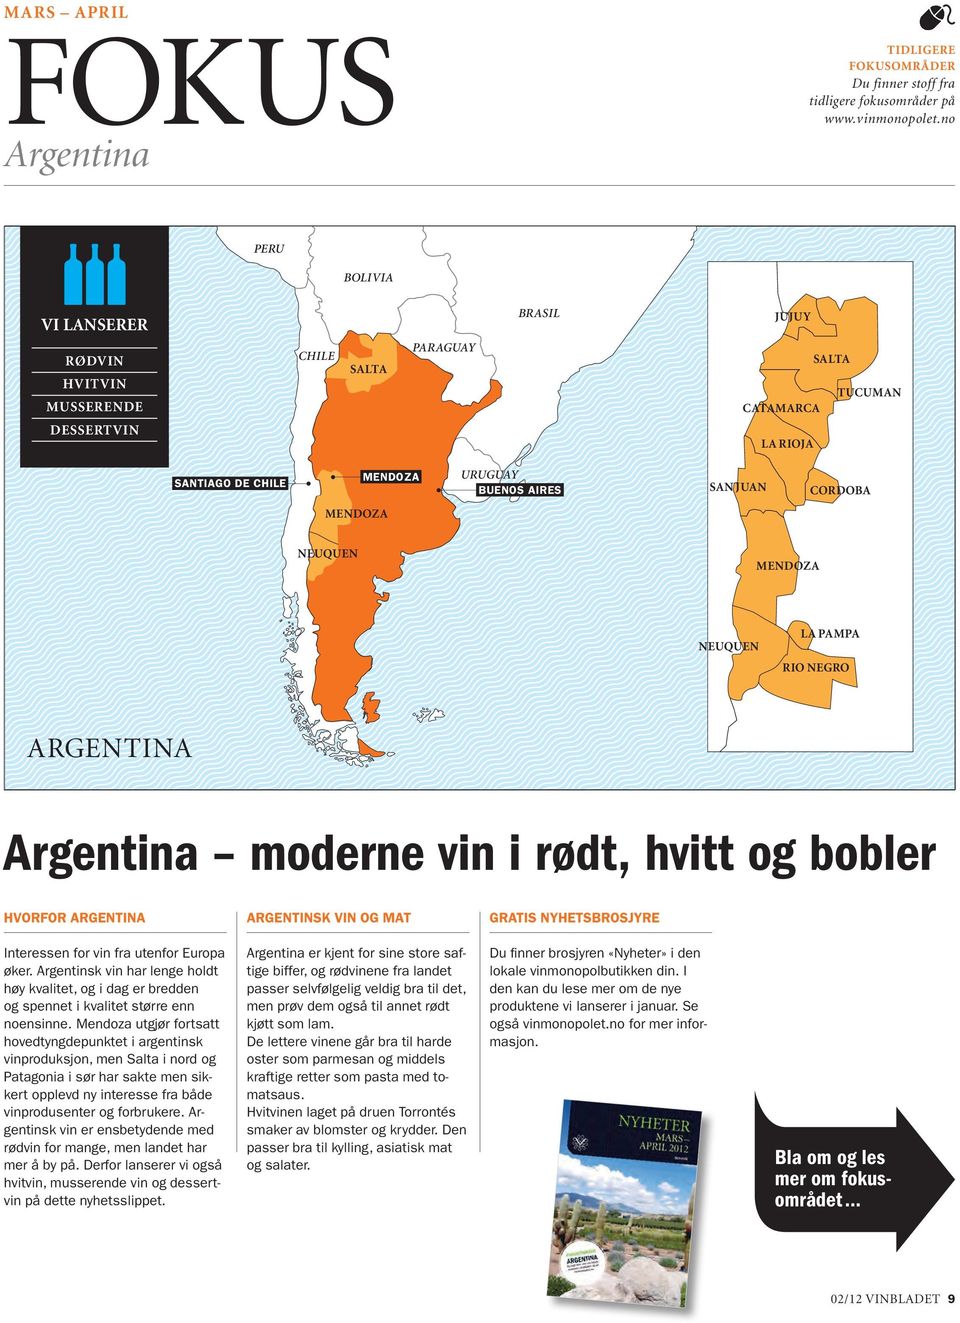 mendoza neuquen mendoza neuquen la pampa rio negro Argentina Argentina moderne vin i rødt, hvitt og bobler Hvorfor argentina Argentinsk vin og mat Gratis nyhetsbrosjyre Interessen for vin fra utenfor